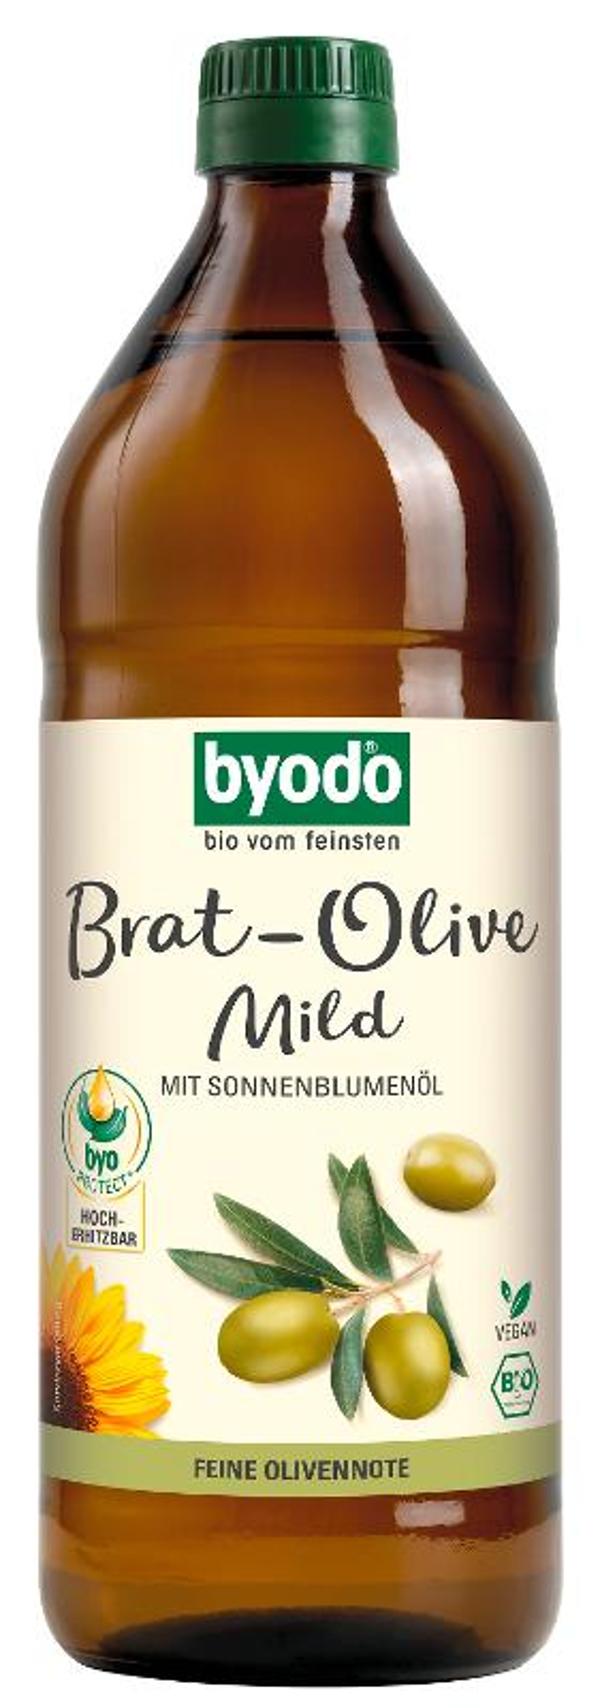 Produktfoto zu Bratöl Olive-mild